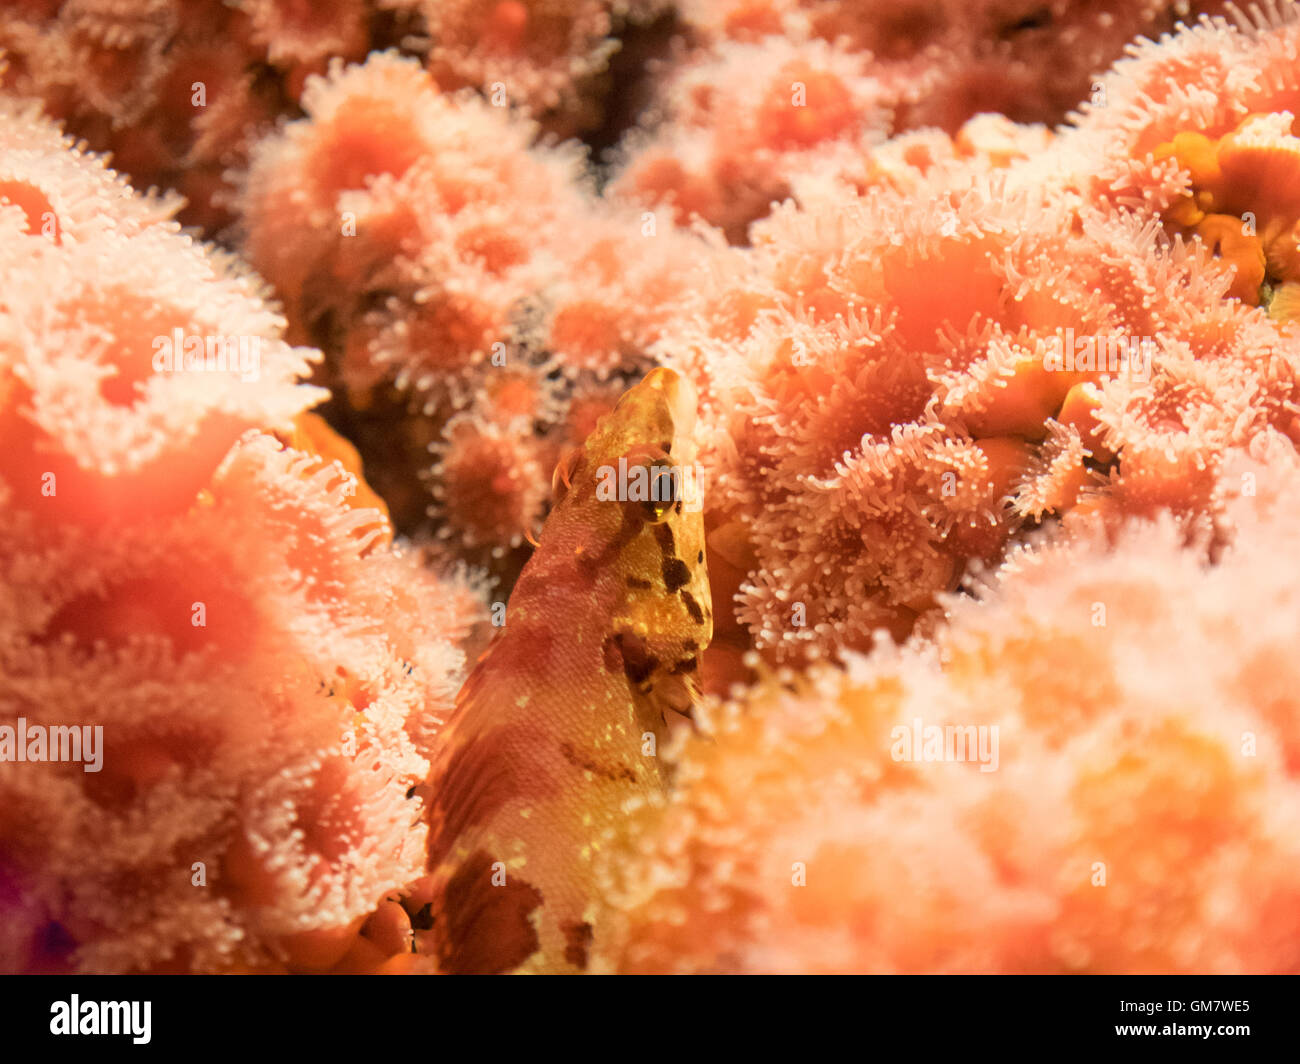 Ein Drachenkopf ist in Erdbeer Anemone (Corynactis Californica) im Vancouver Aquarium getarnt. Stockfoto